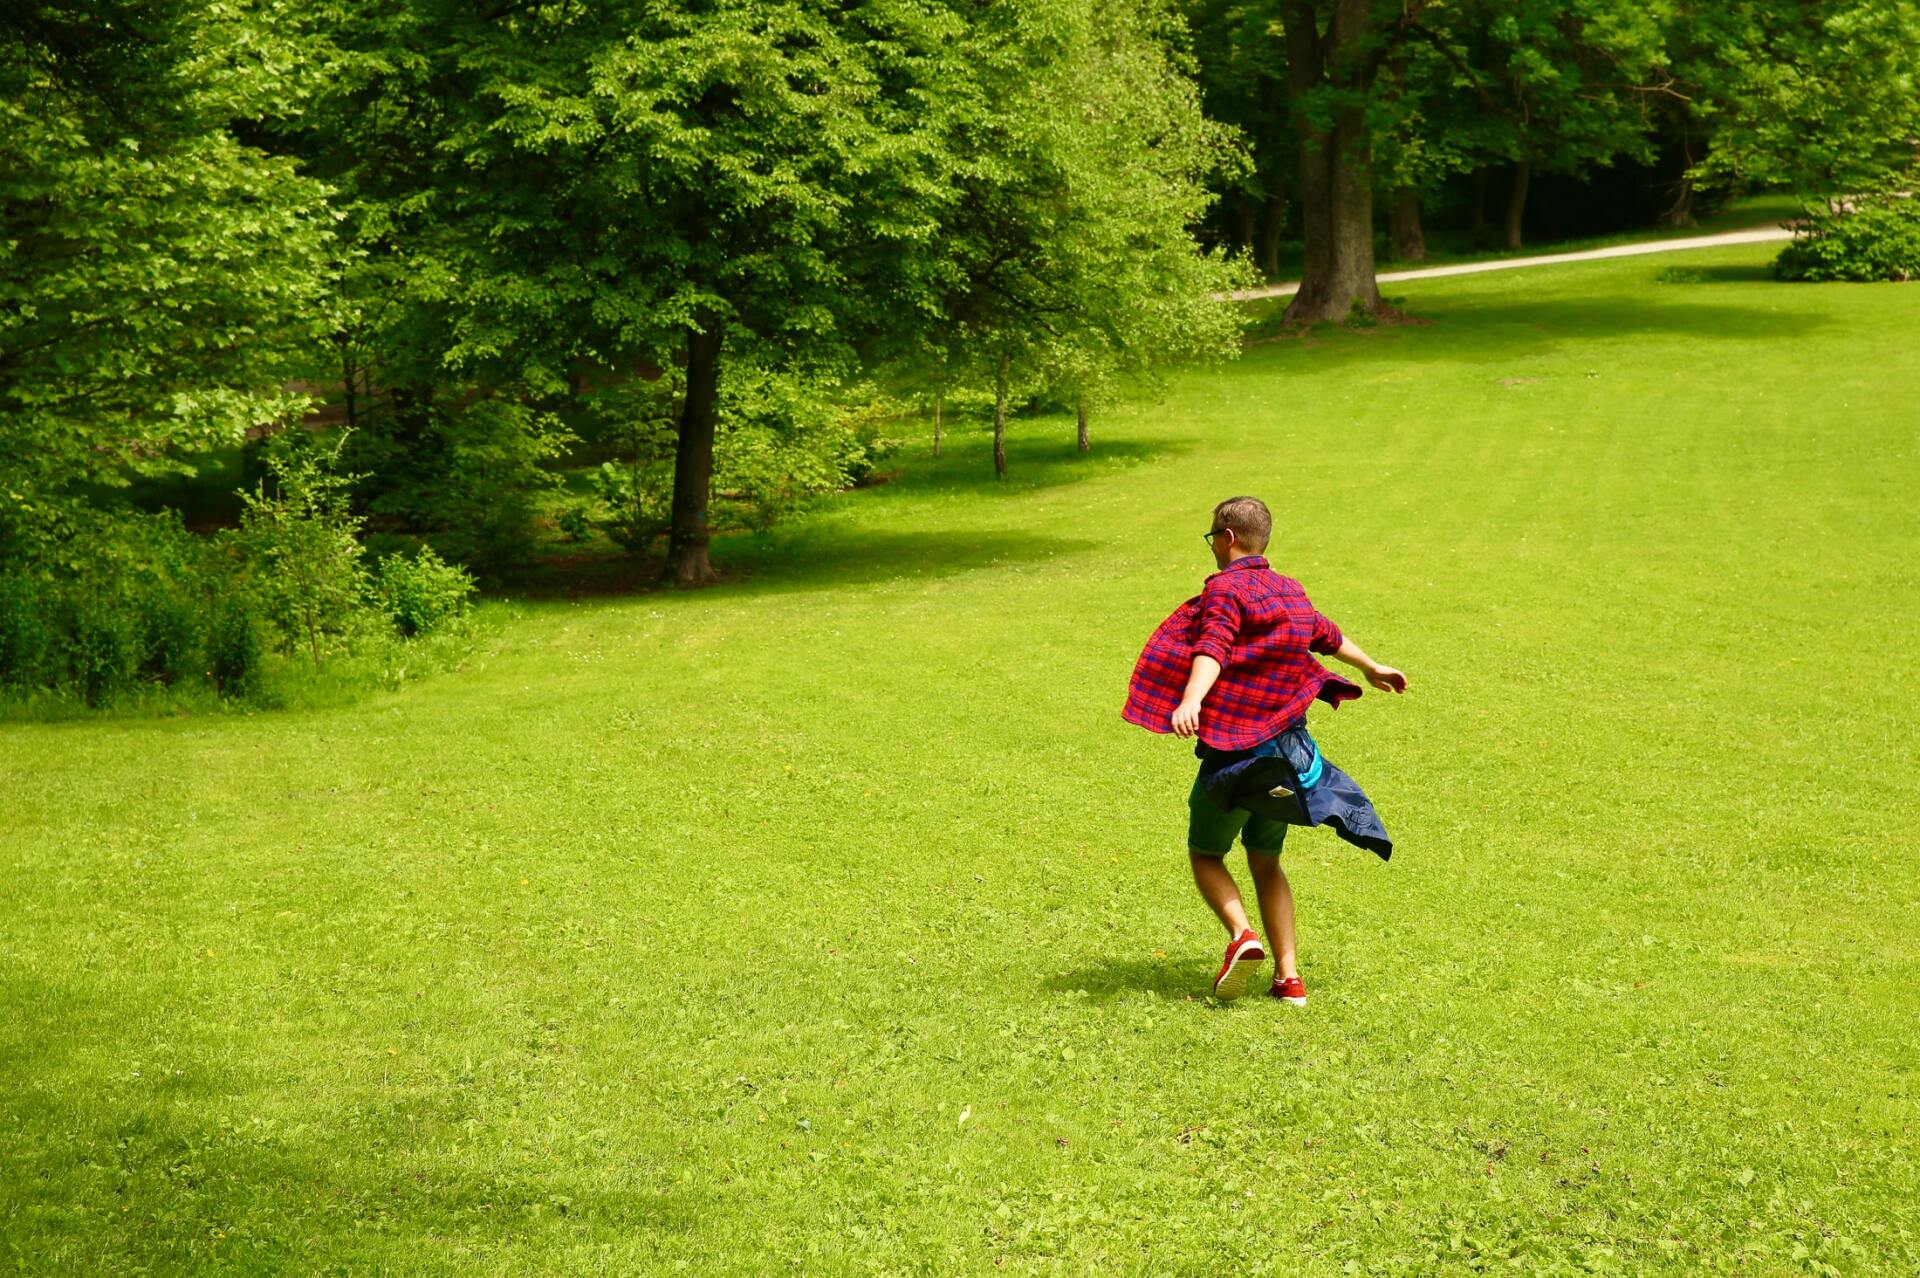 Kids playing in yard in green mowed grass